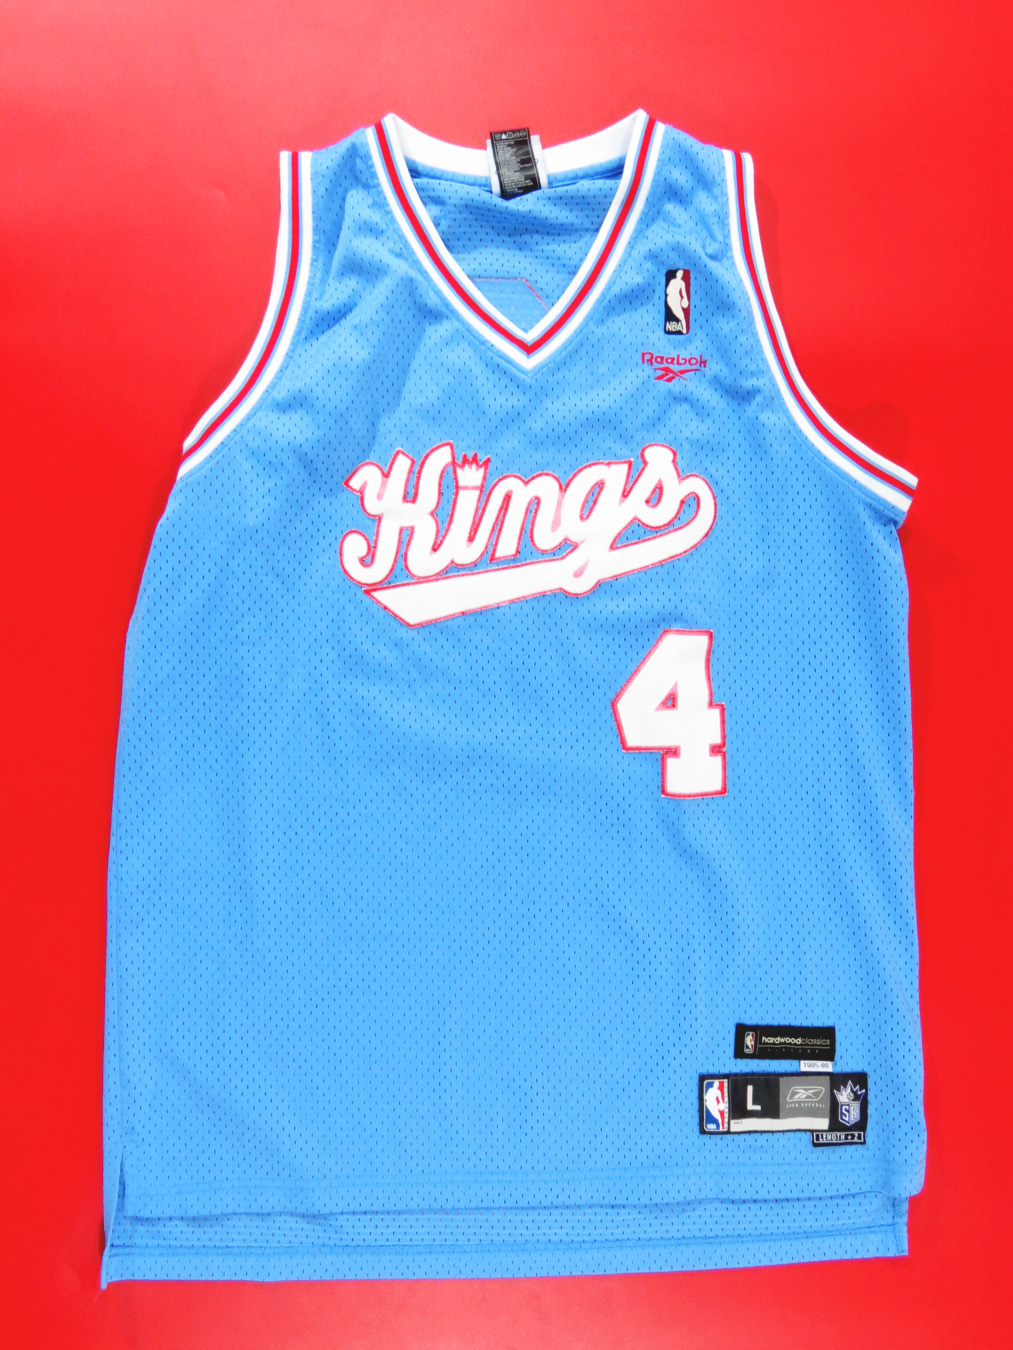 Chris Webber 1998-2005 Sacramento Kings Reebok NBA replica basketball jersey  grey alternate colorway (Men sz. 2XL)